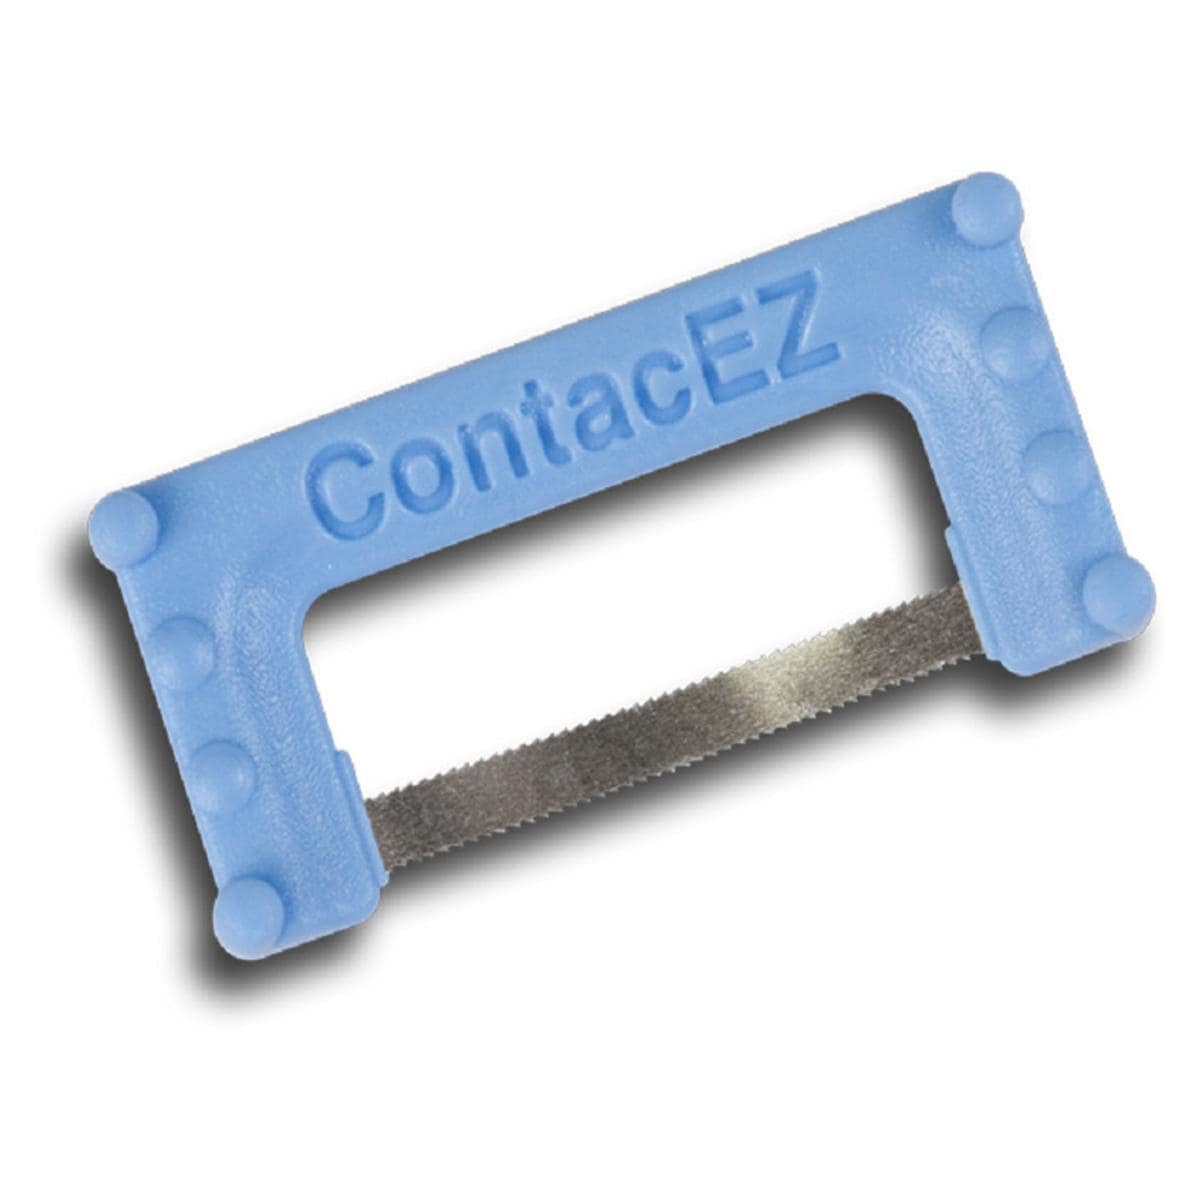 ContacEZ Subgingival Strip - navulling - REF. 33716 - Blauw, 16 stuks